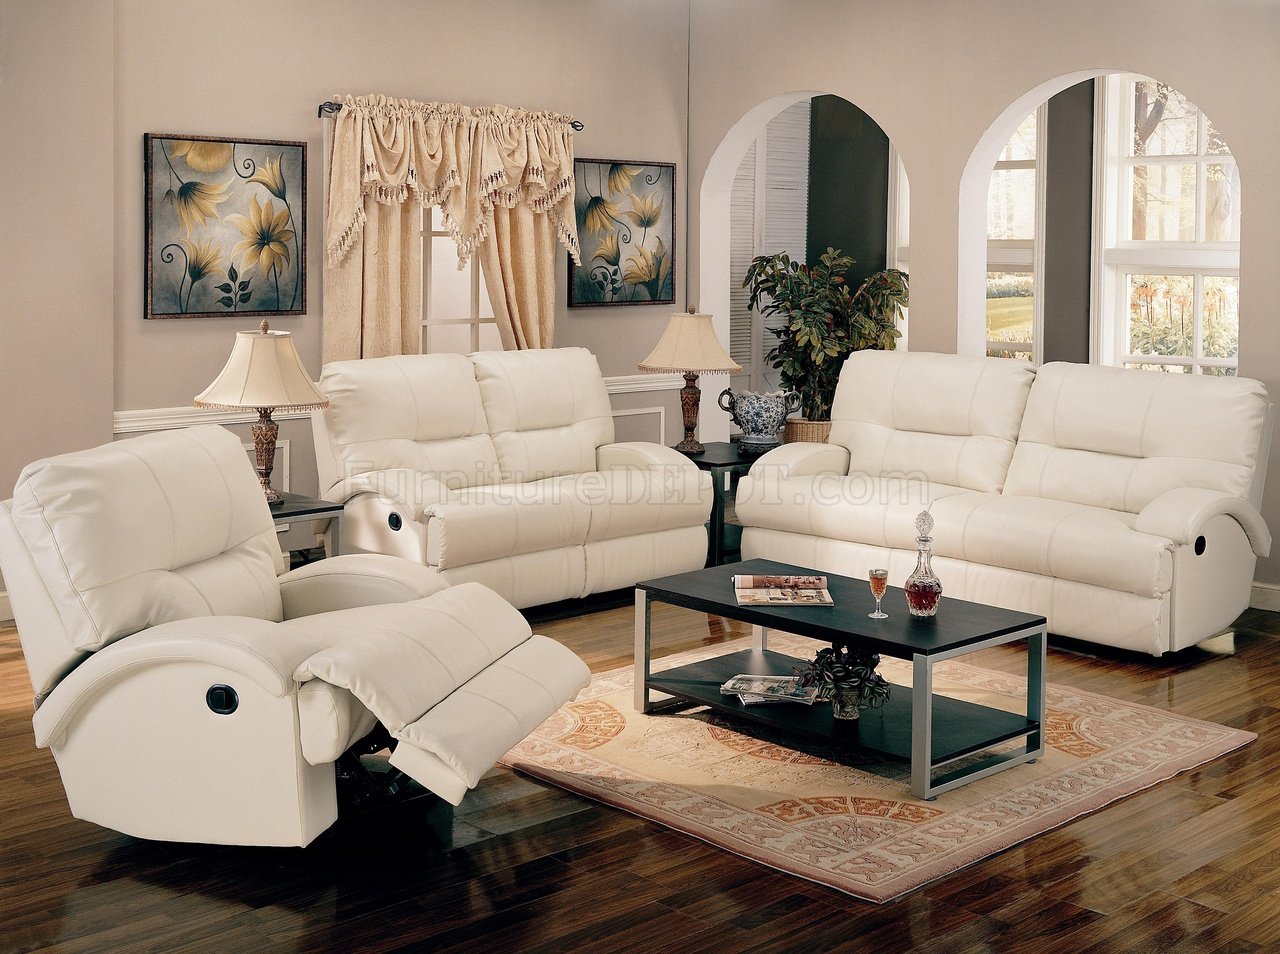 white leather sofa living room design